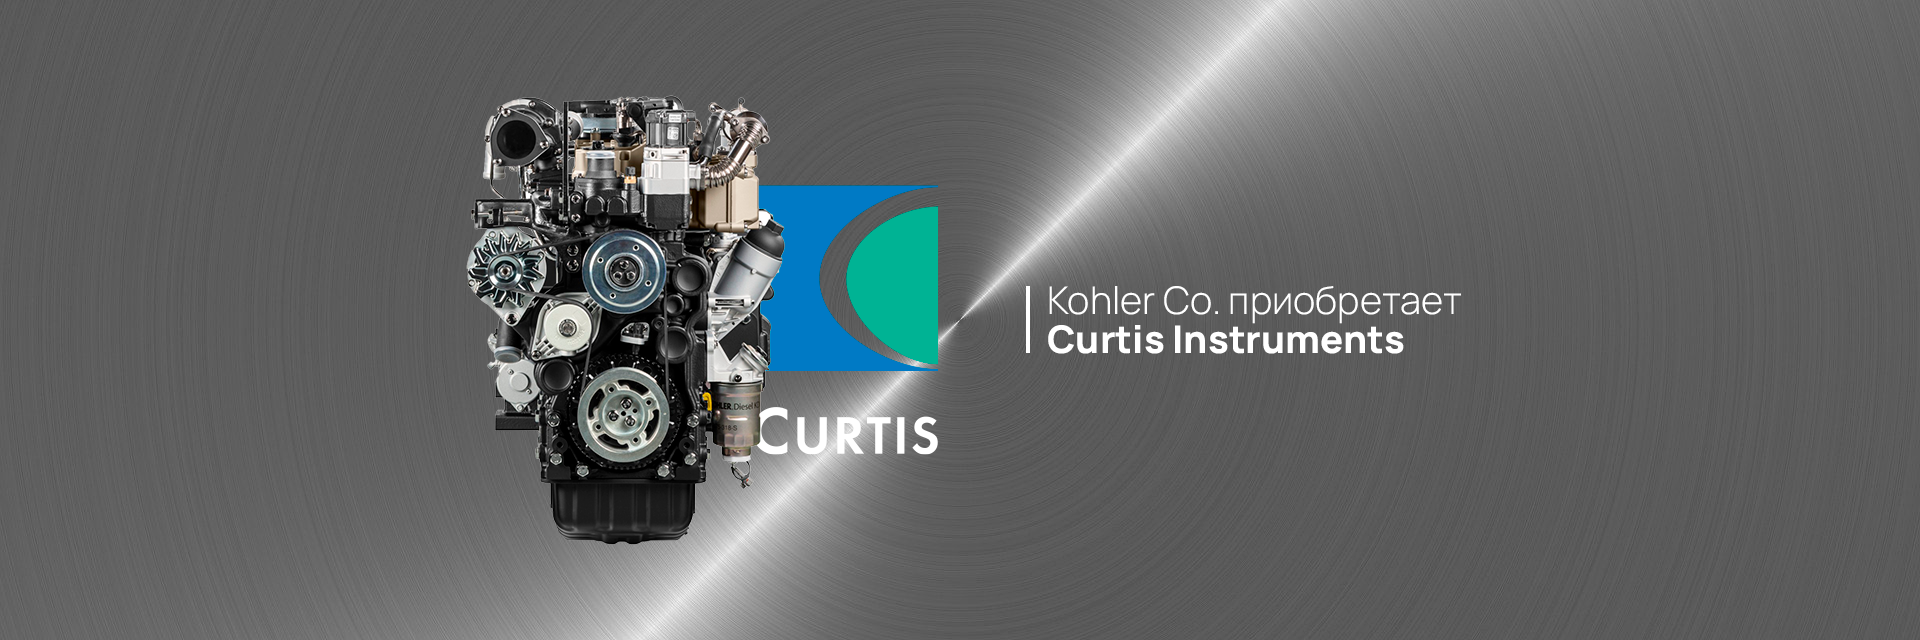 Kohler Co. приобретает Curtis Instruments